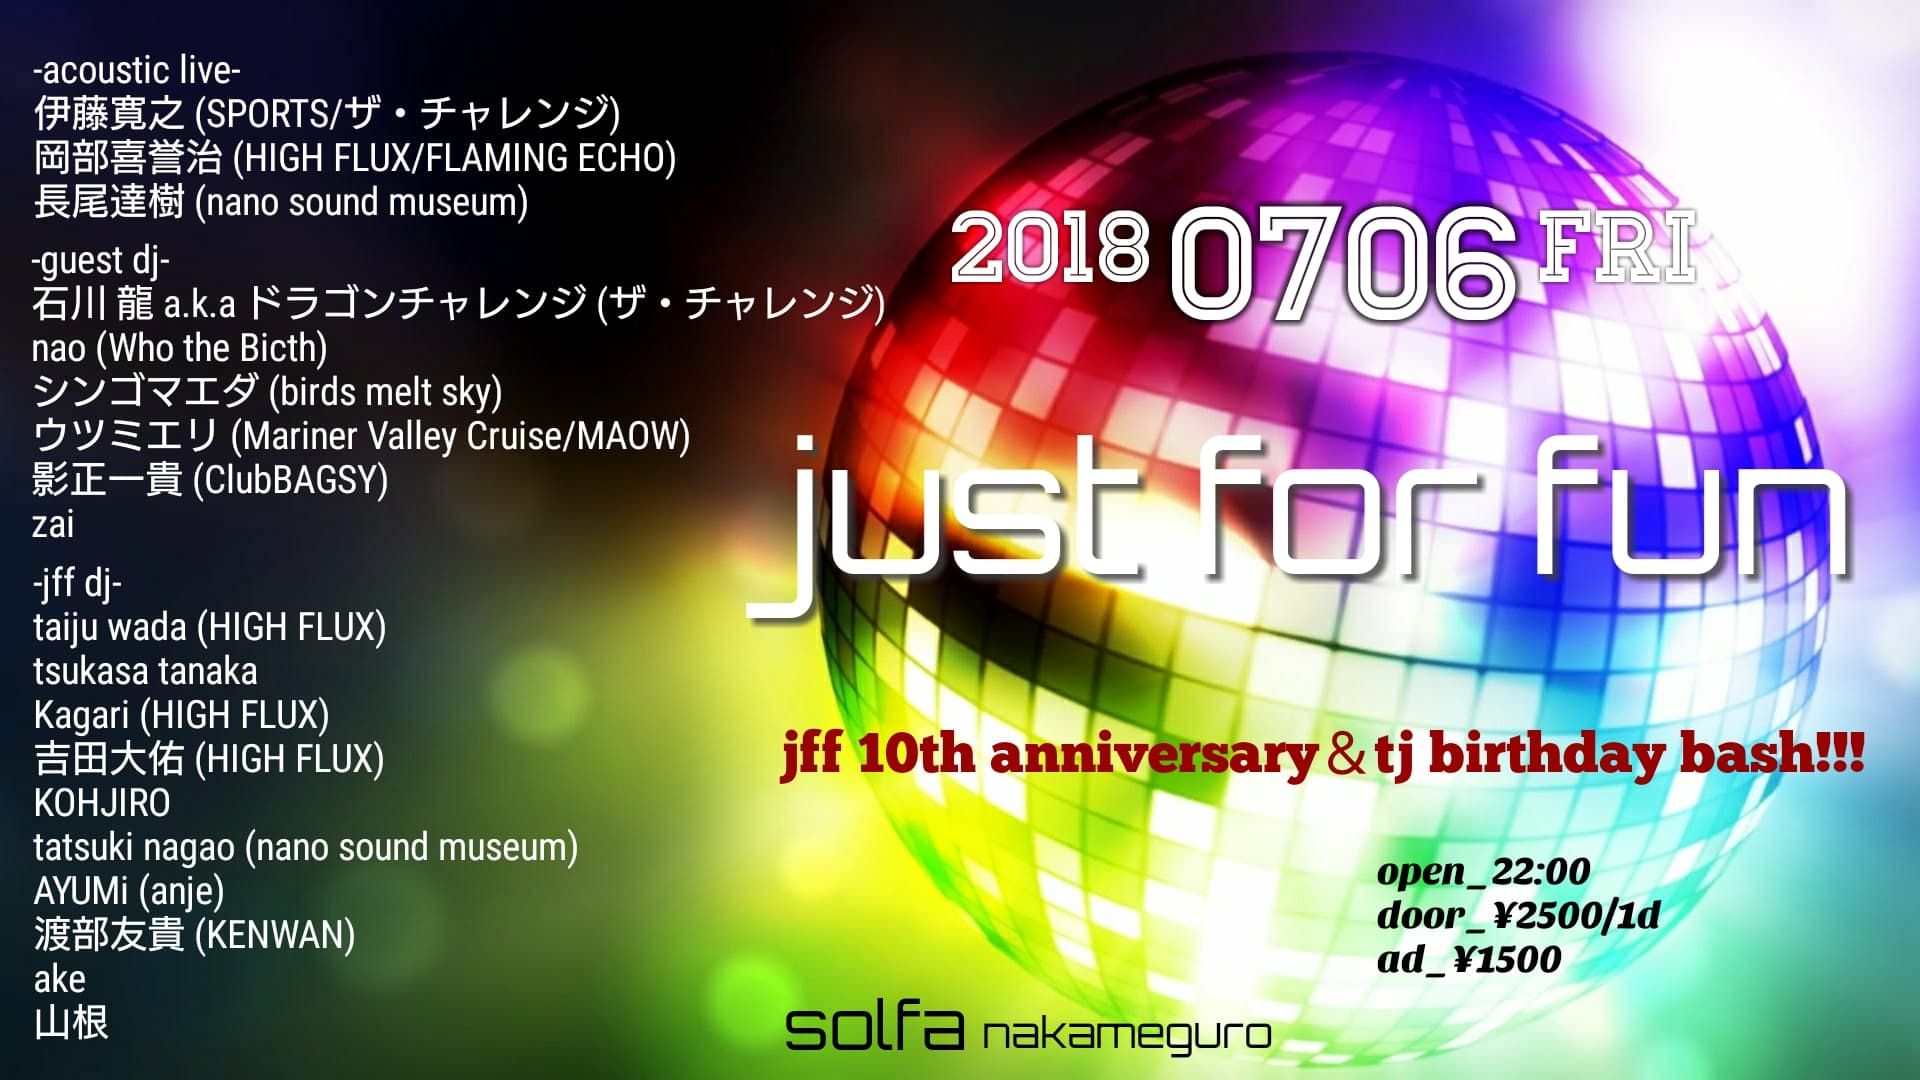 just for fun “jff 10th anniversary＆tj birthday bash!!!